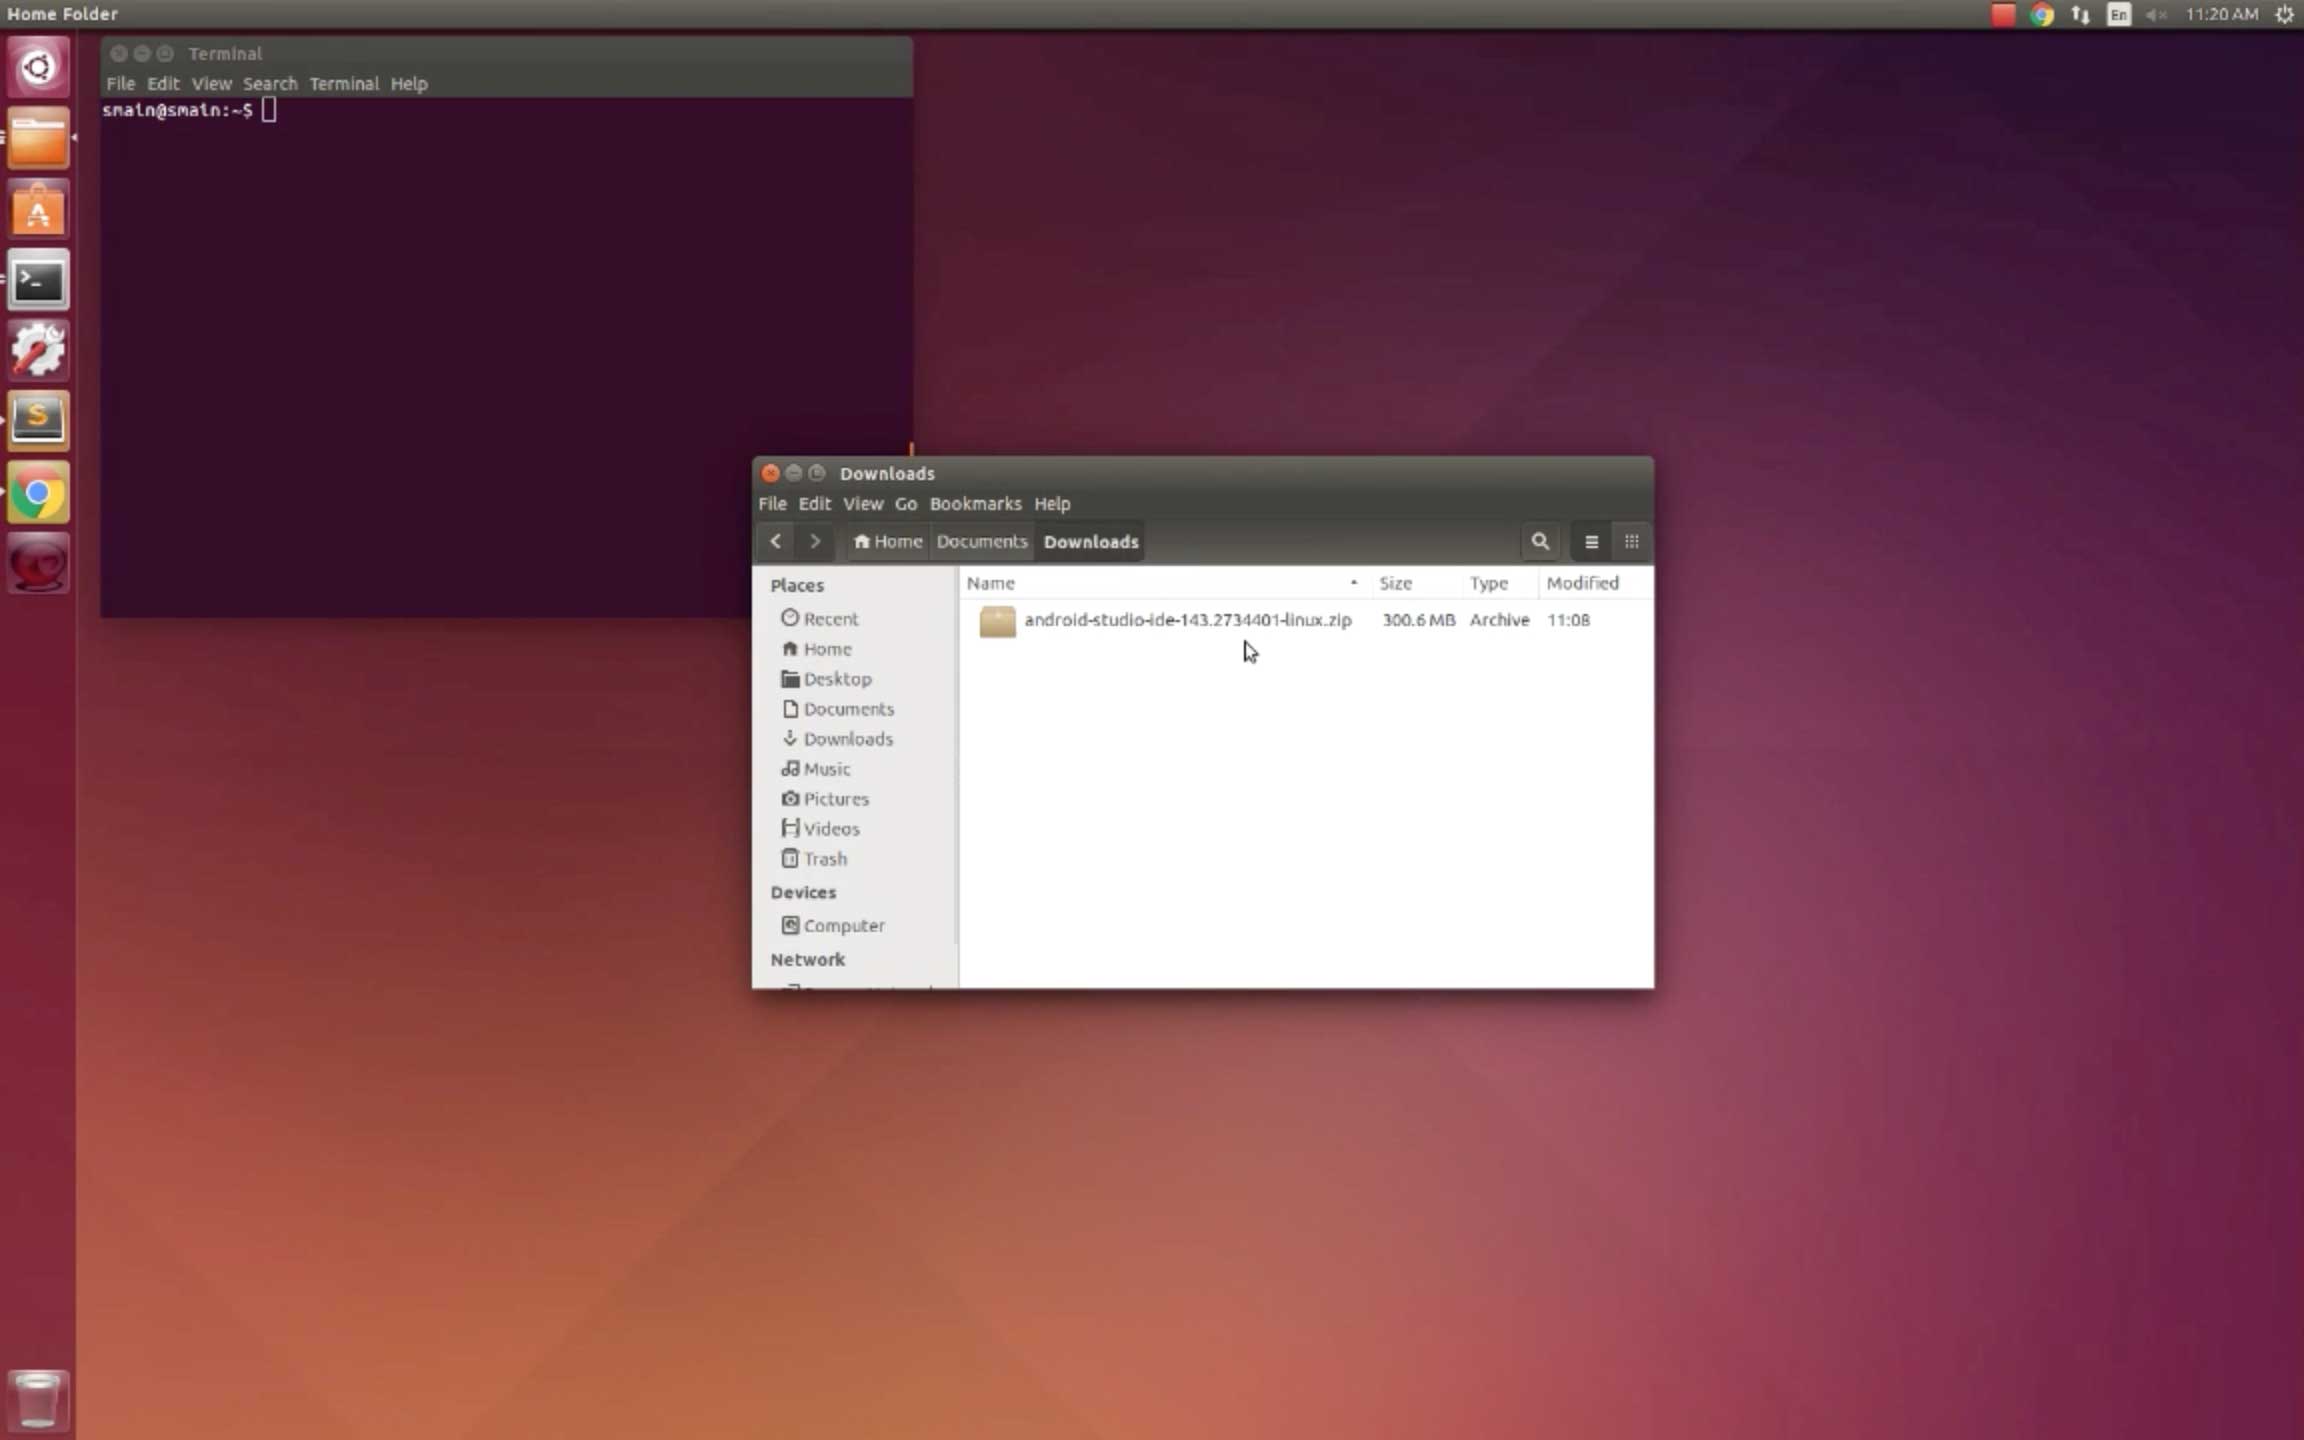 how to install ubuntu on a mac lapiop